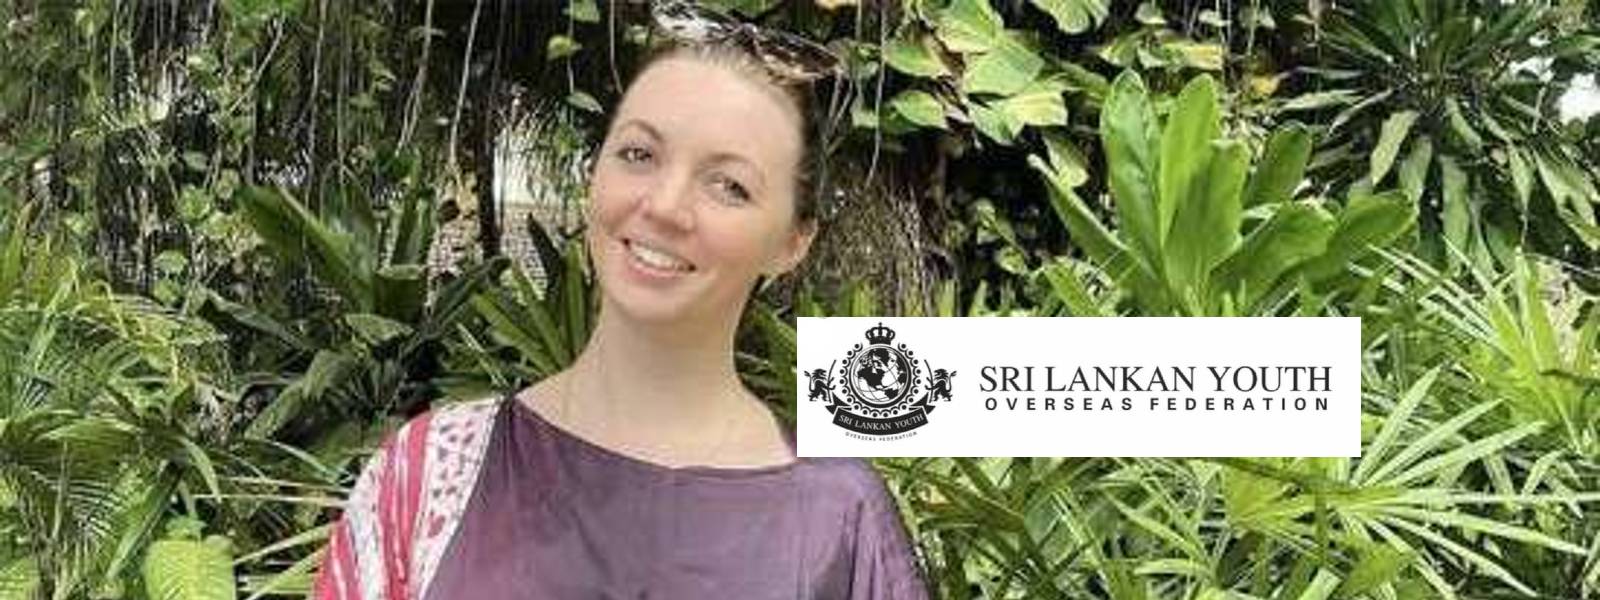 Accusations against Scottish tourist Kayleigh Fraser ‘unjustified’ – SLYOF